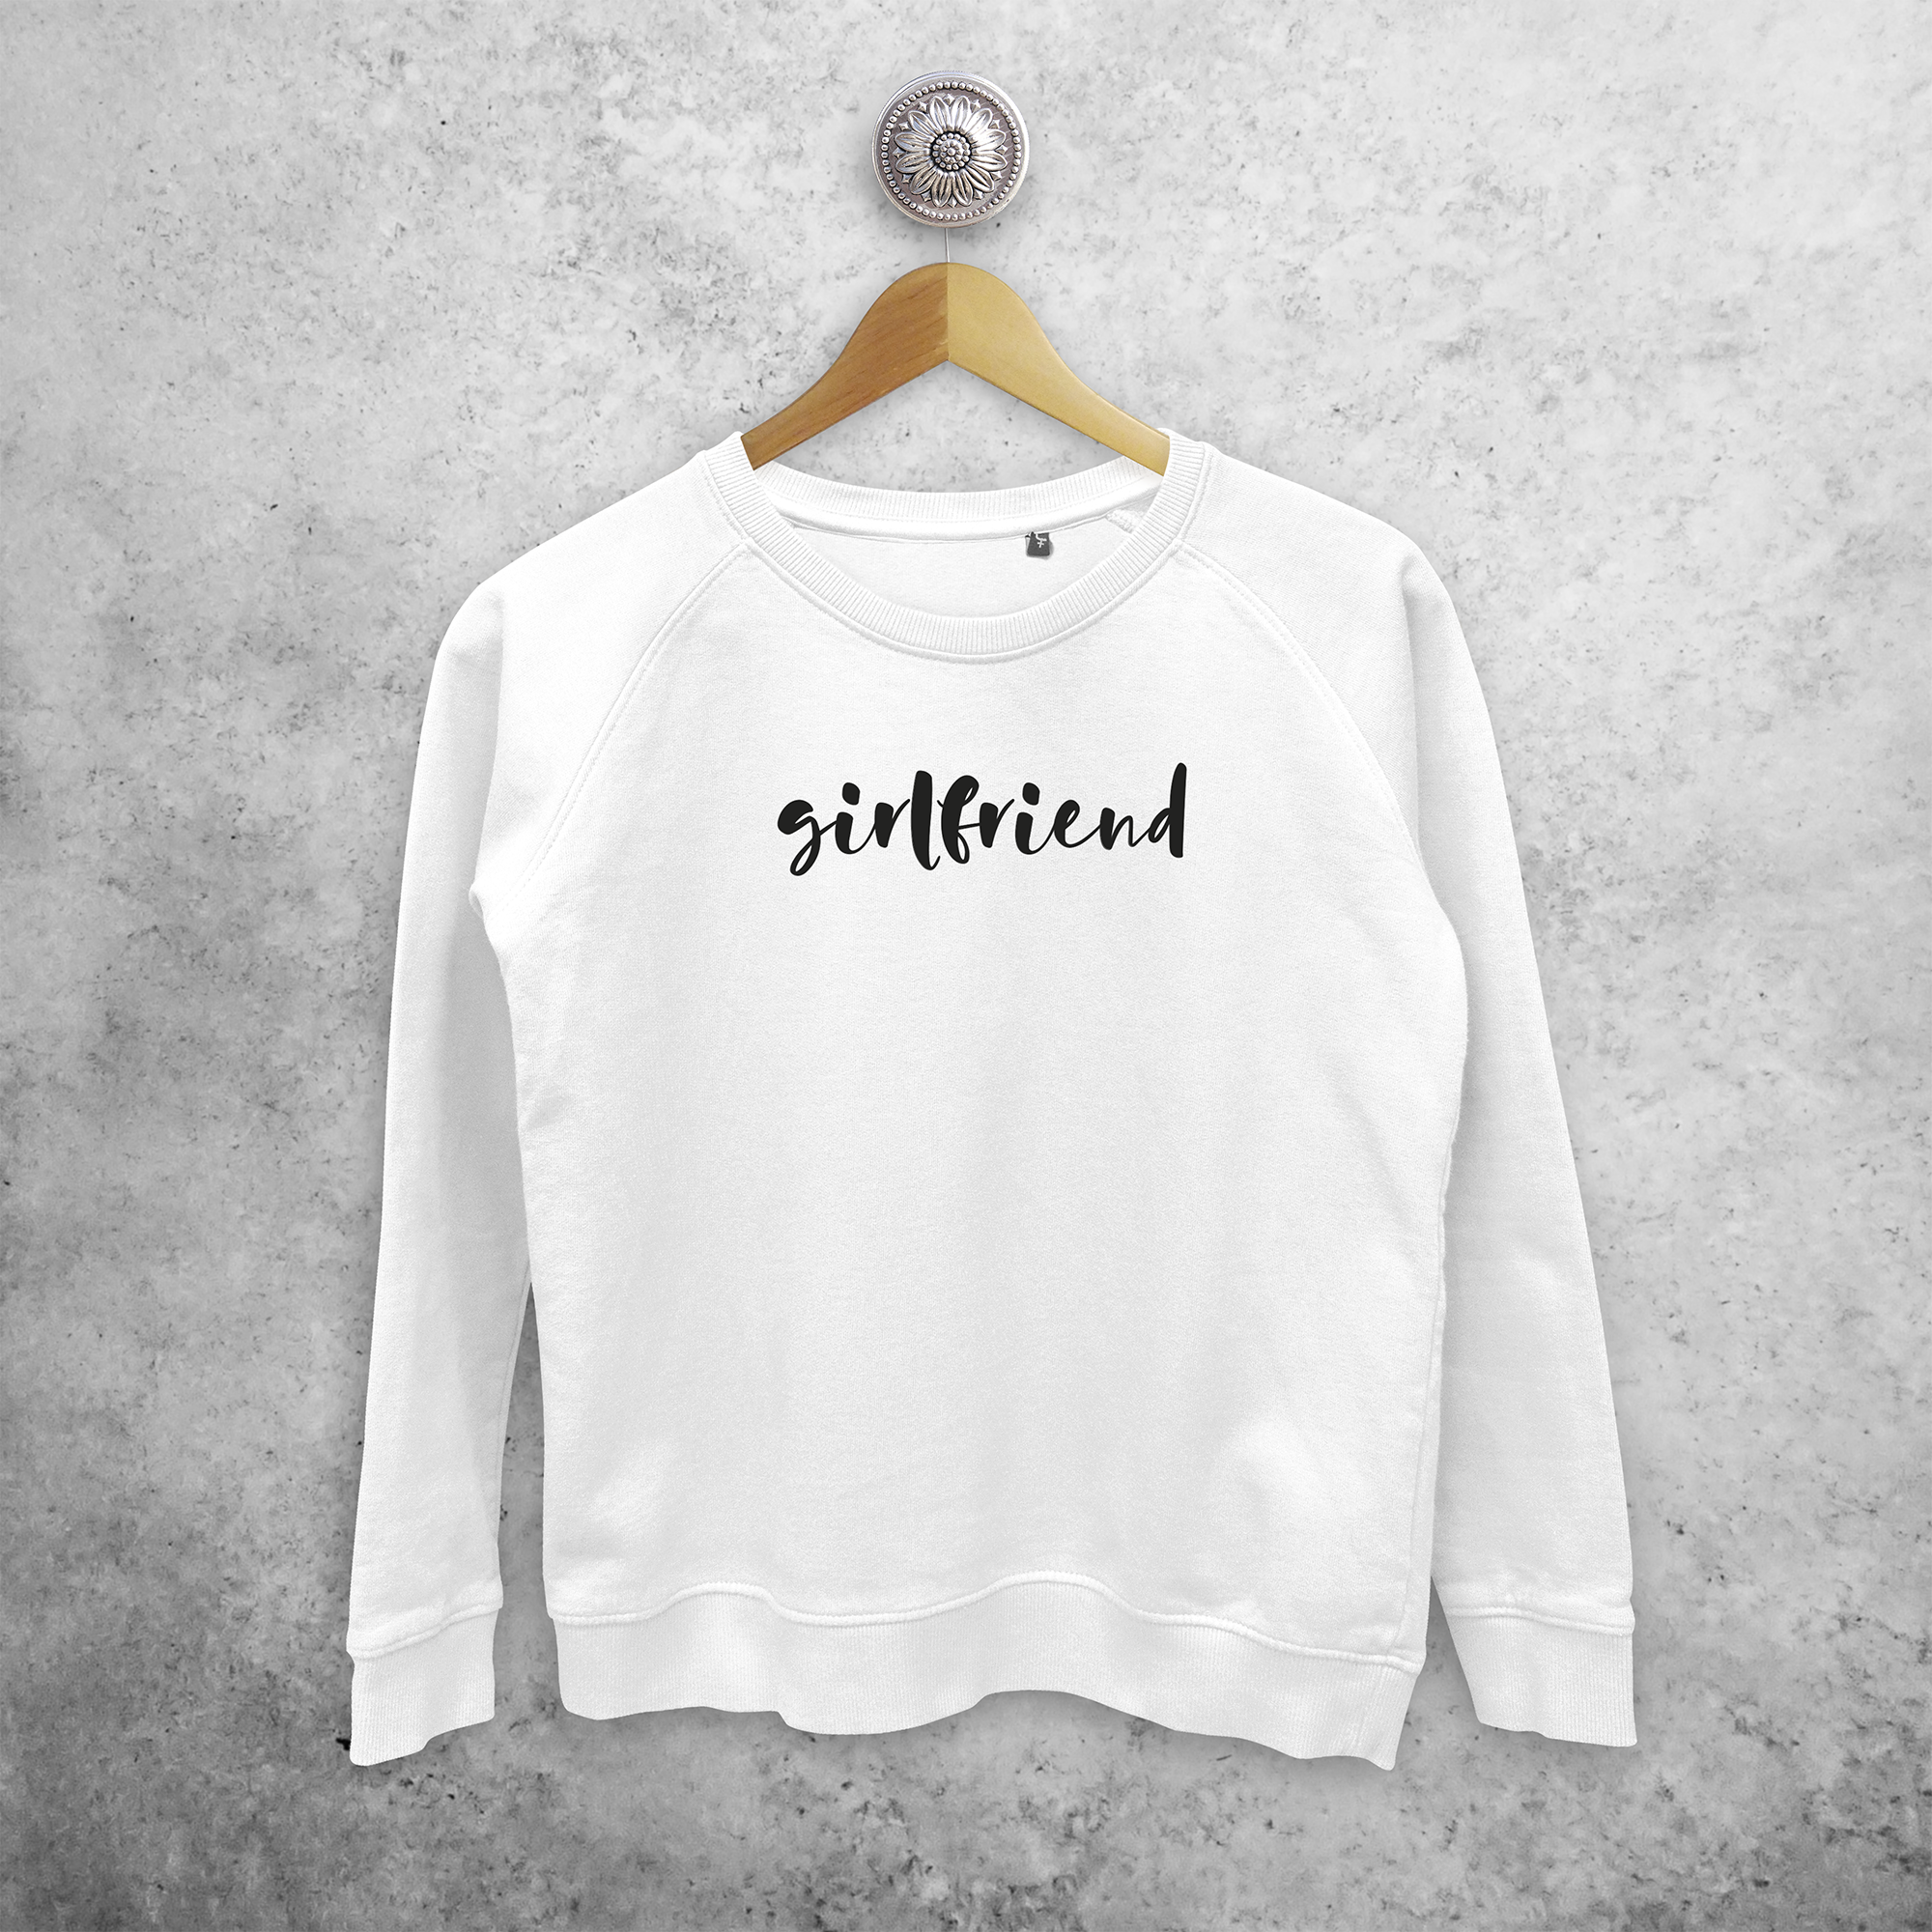 'Girlfriend' sweater